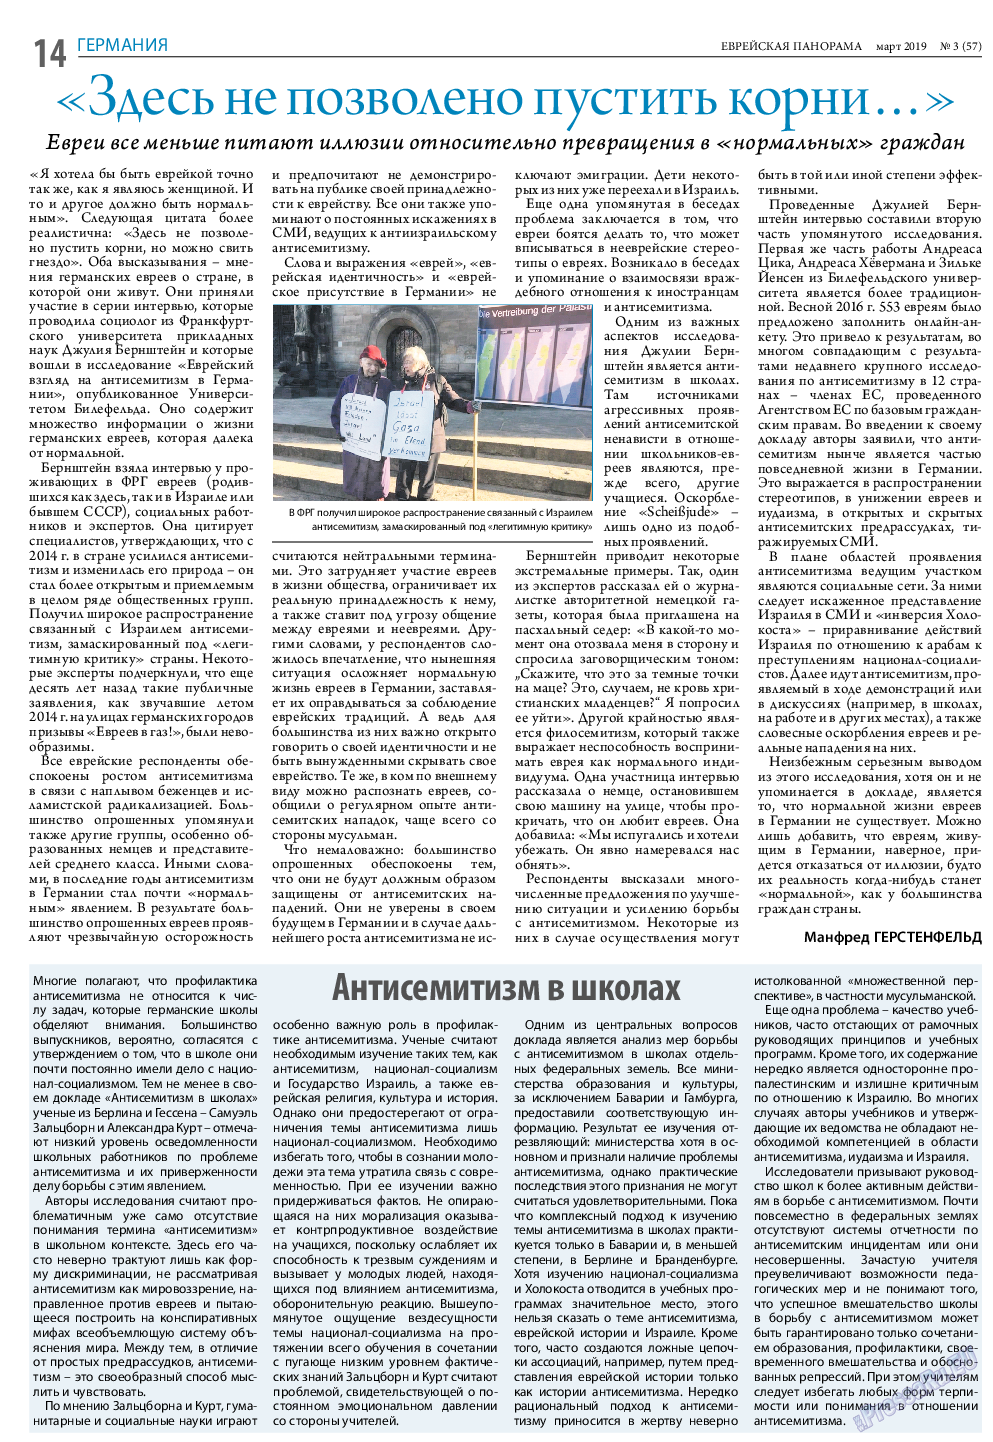 Еврейская панорама, газета. 2019 №3 стр.14